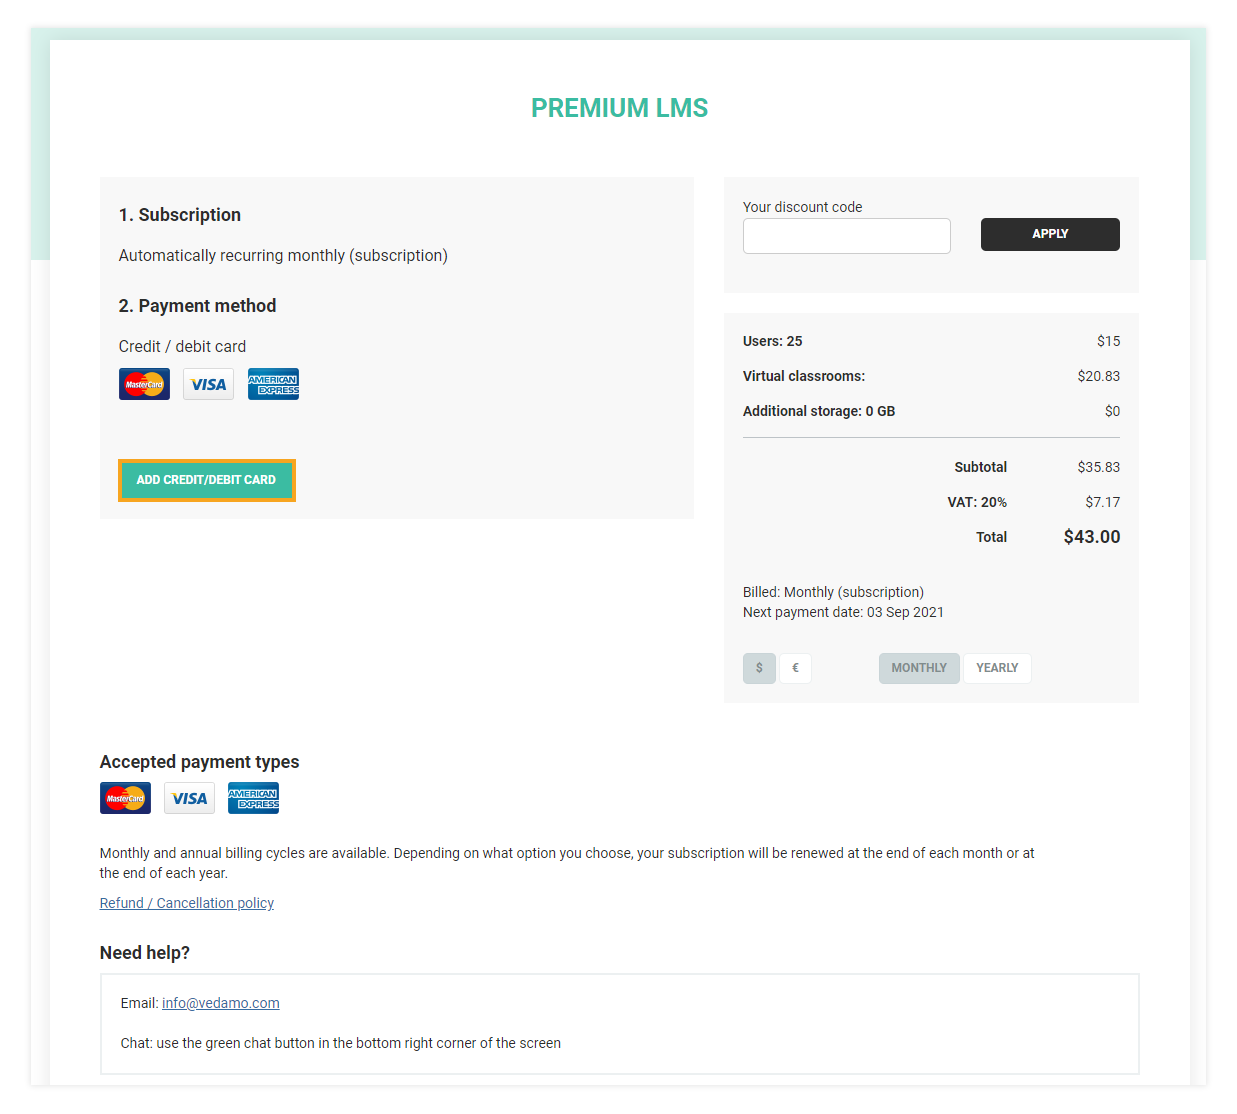 Upgrade to Premium: Add credit/debit card information